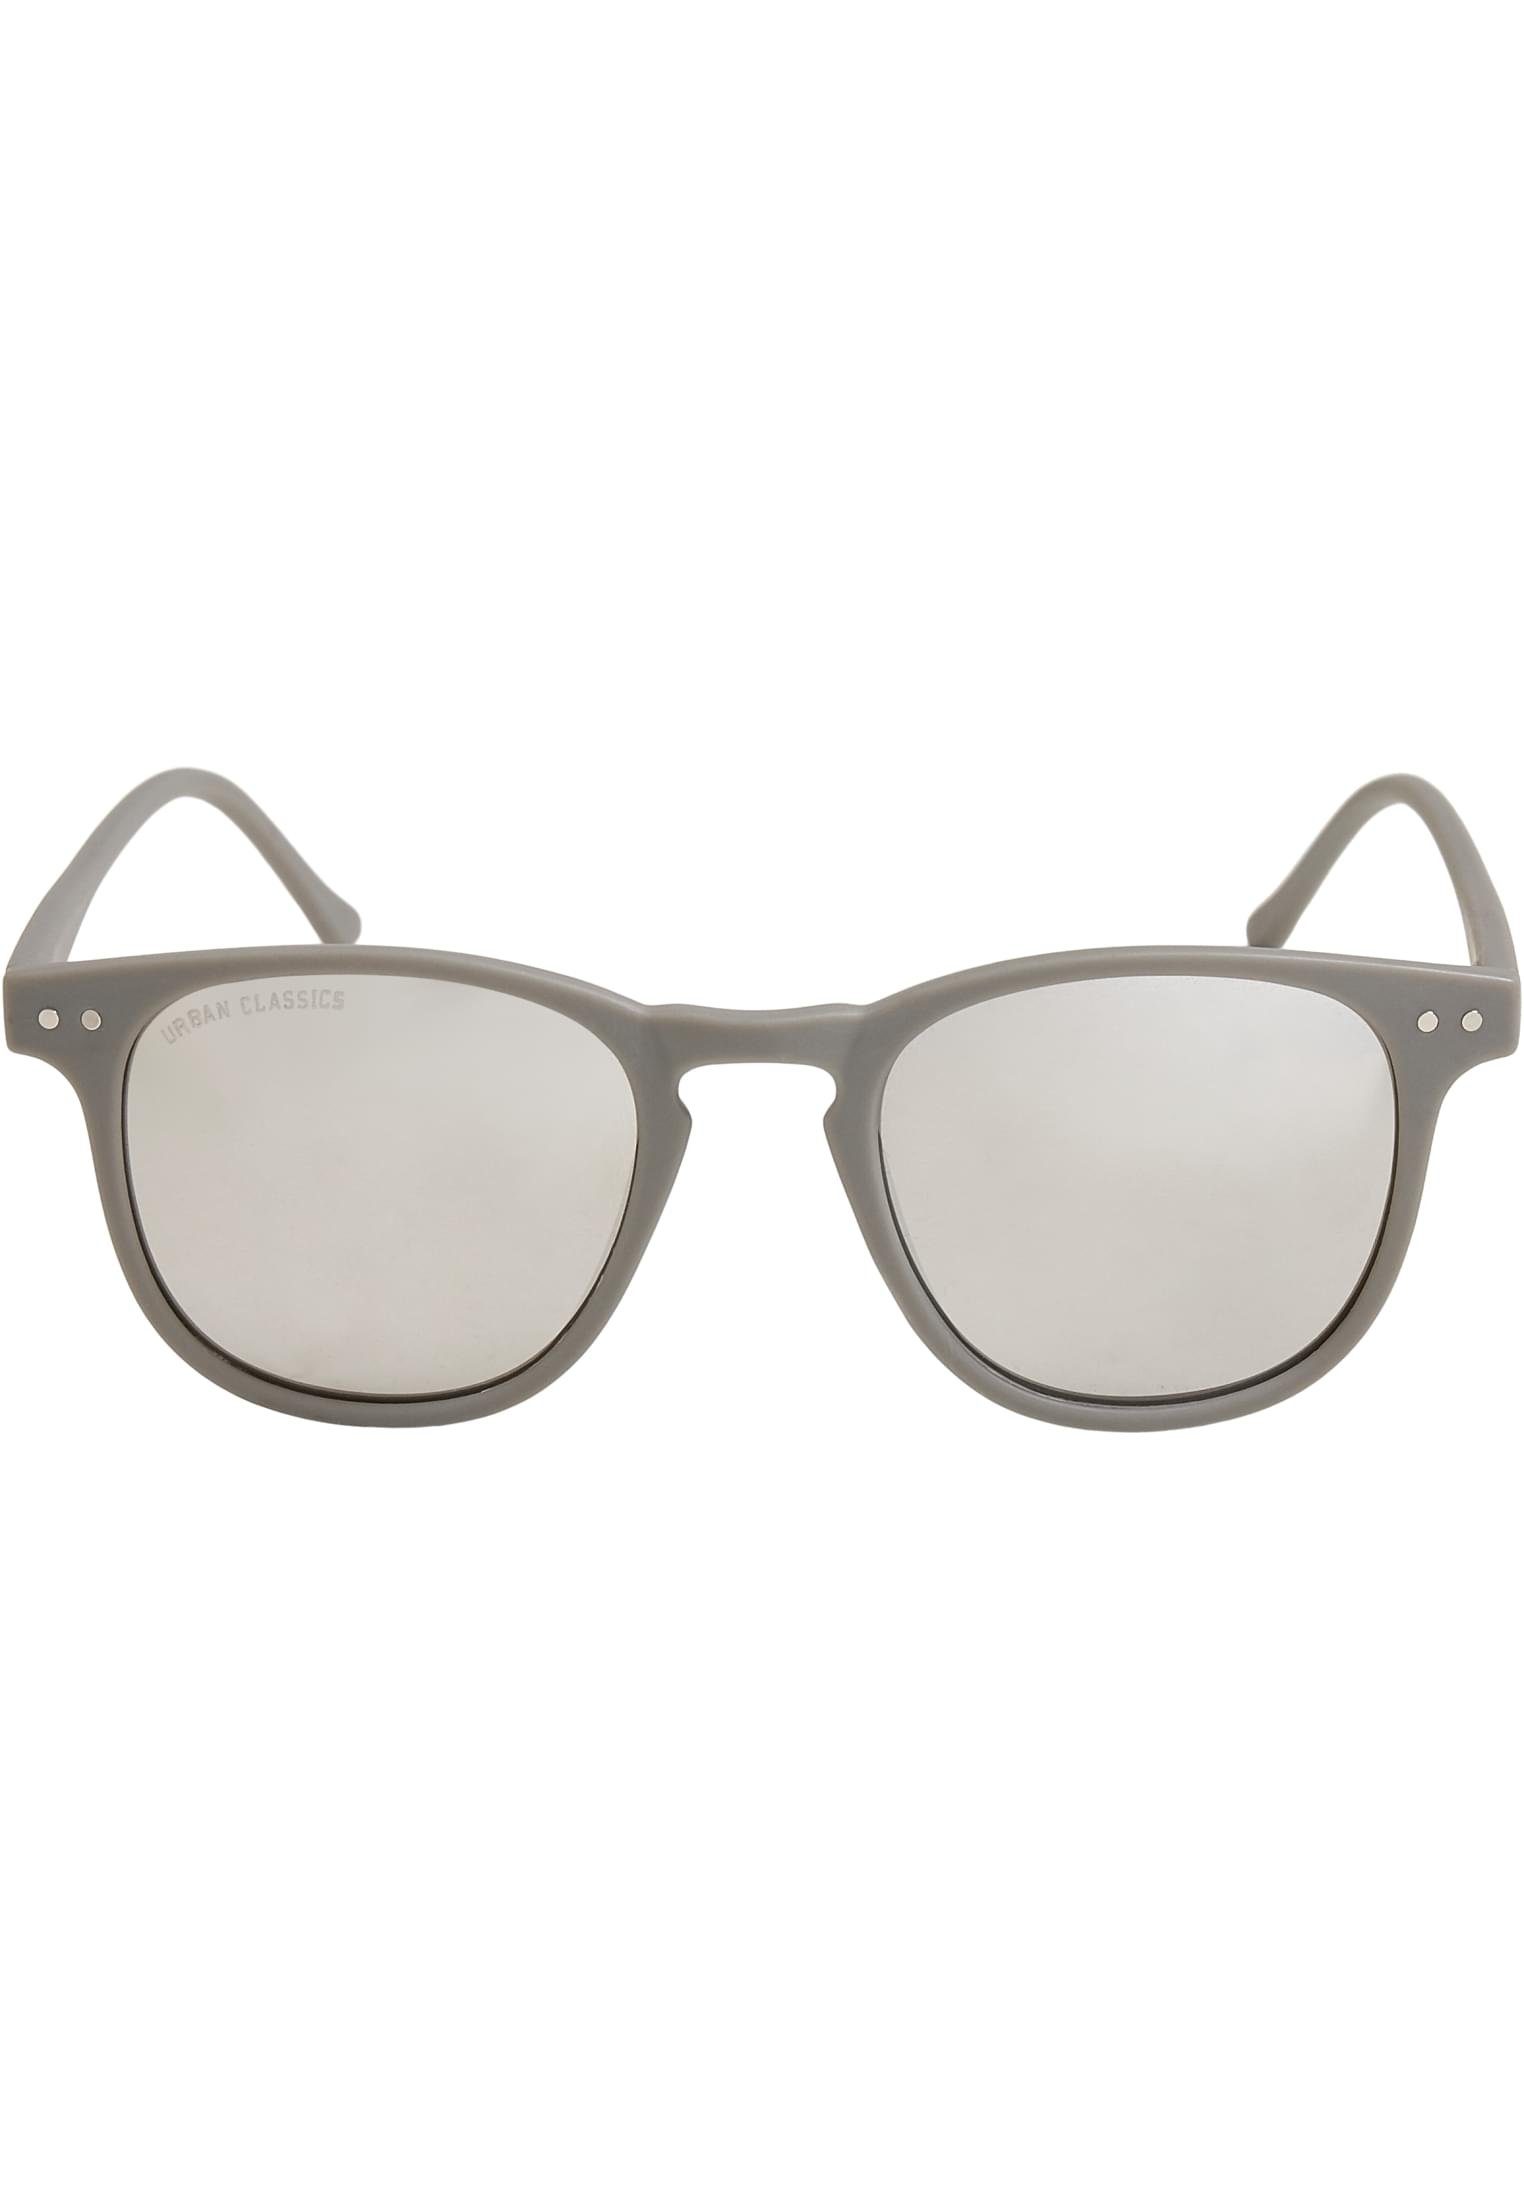 Unisex Sunglasses with Chain CLASSICS grey/silver Arthur Sonnenbrille URBAN